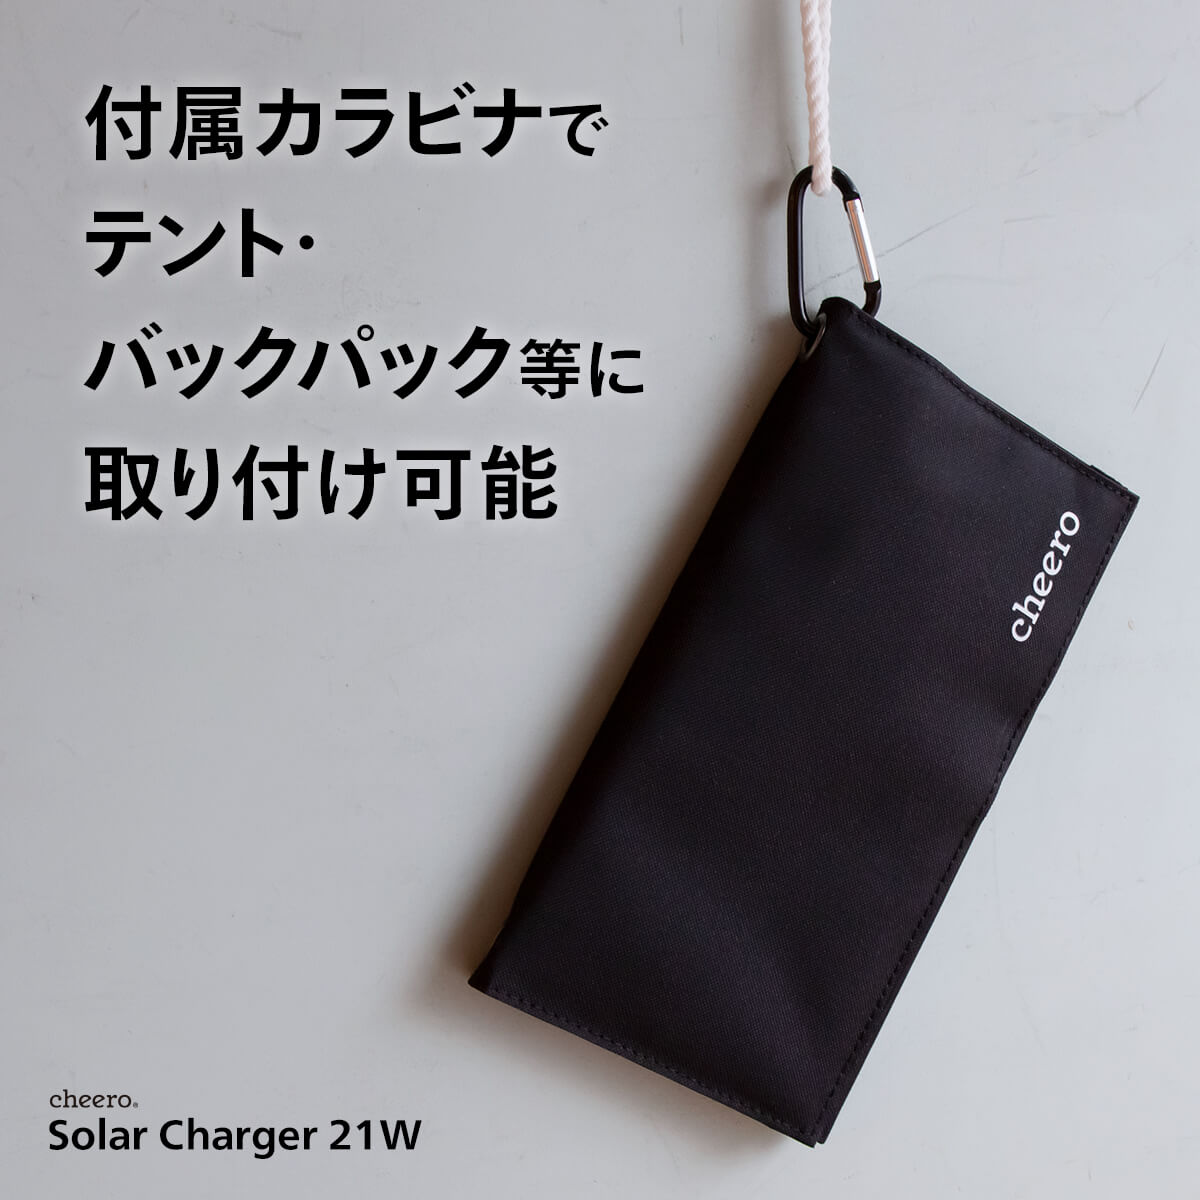 cheero Solar Charger 21W